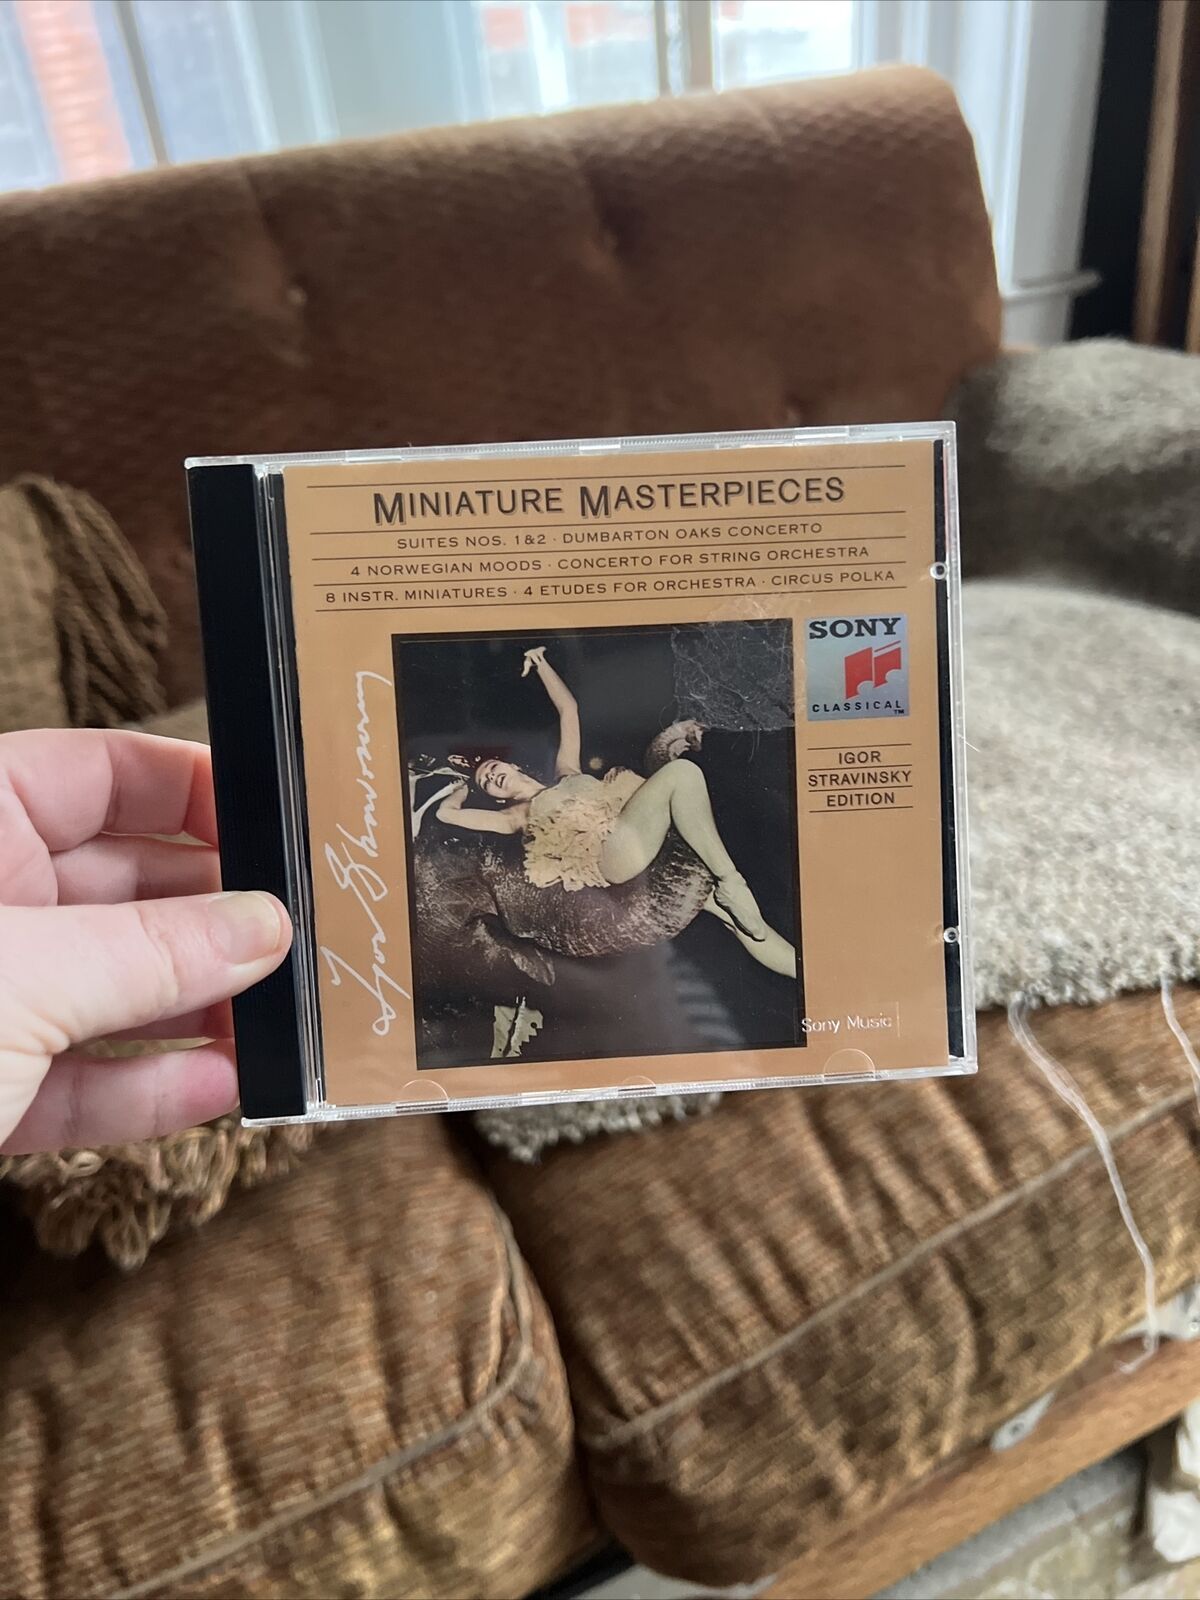 Miniature Masterpieces Igor Stravinsky Classical Sony CD